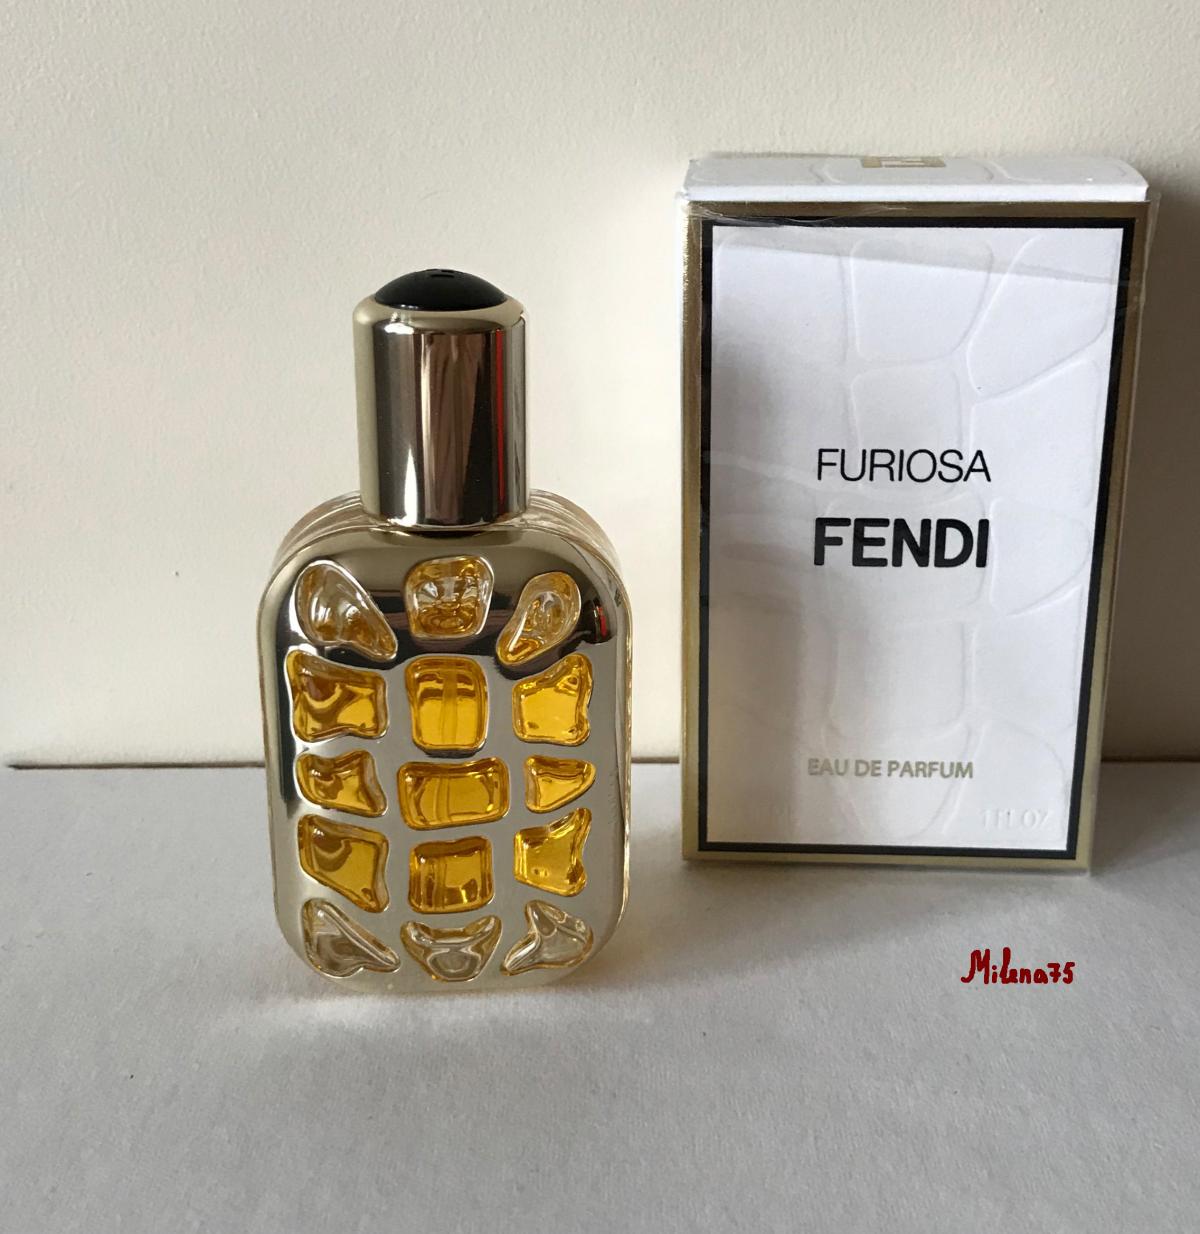 Furiosa Fendi perfume - a fragrance for women 2014